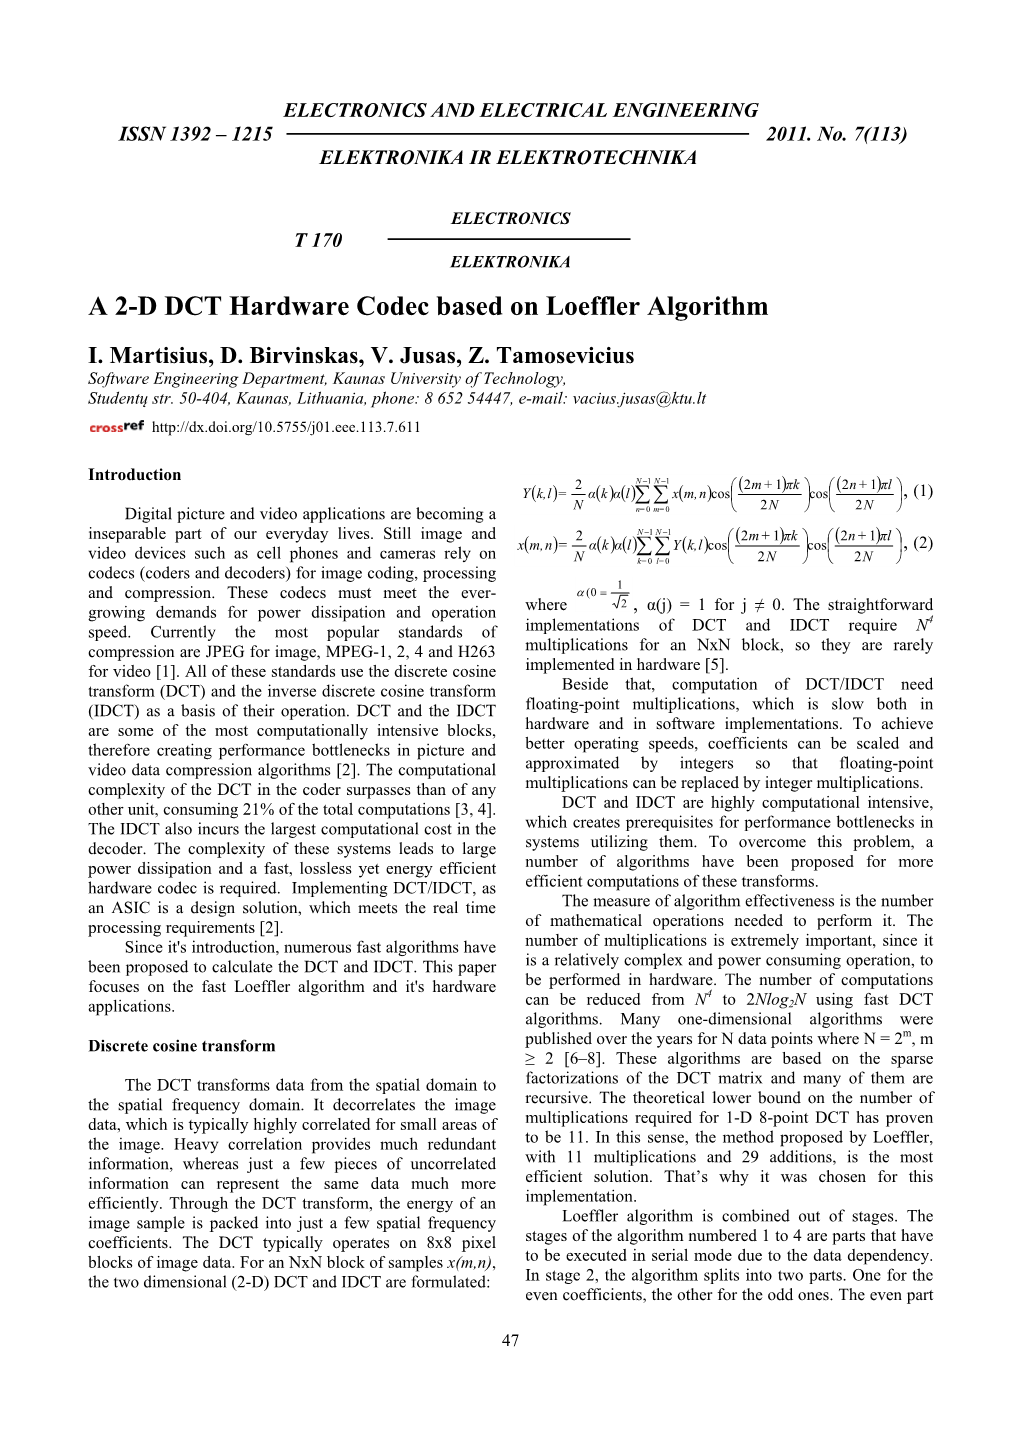 A 2-D DCT Hardware Codec Based on Loeffler Algorithm